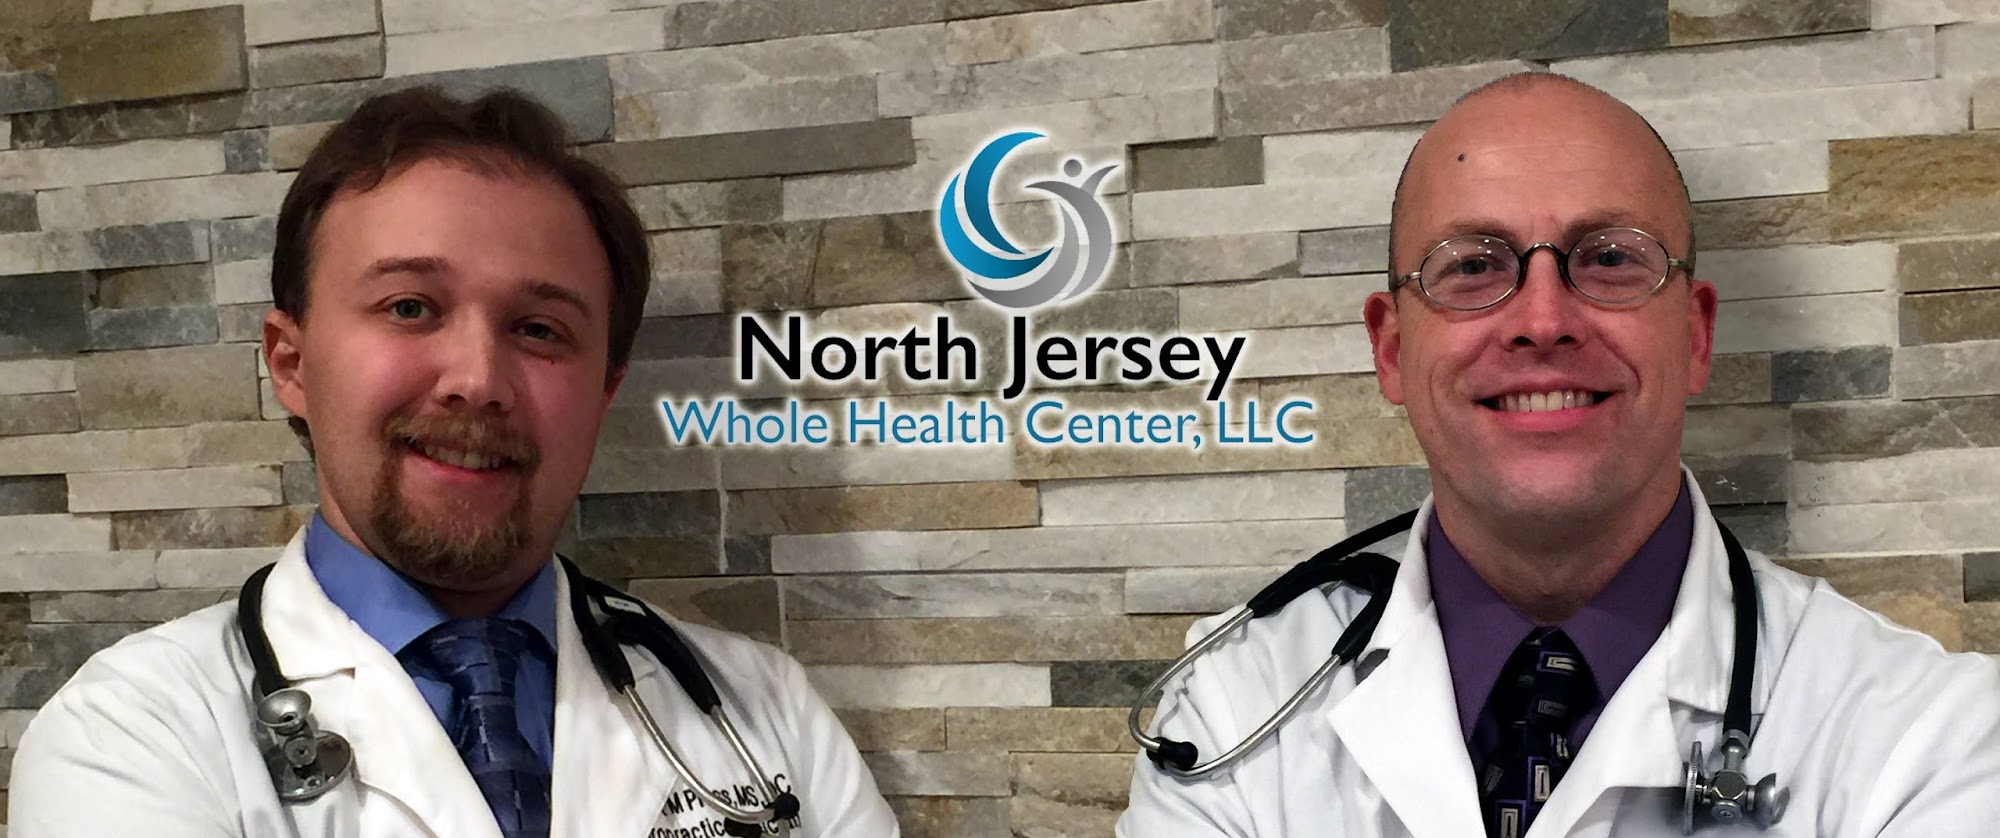 North Jersey Whole Health Center, LLC